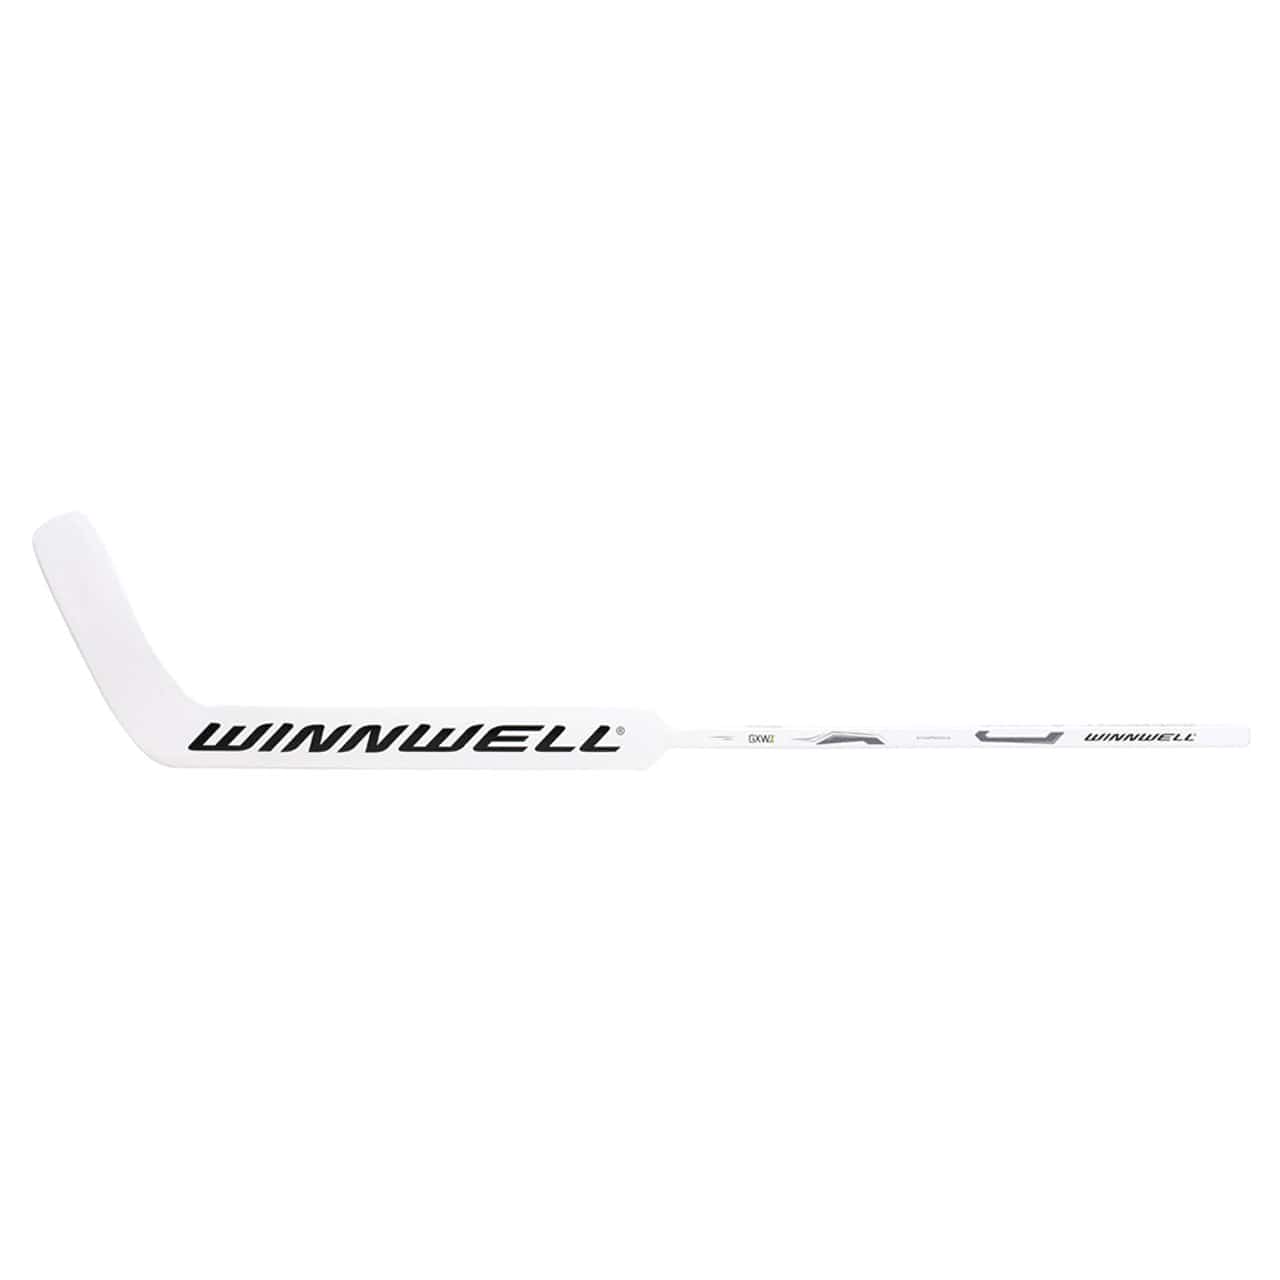 Winnwell GXW1 Intermediate Wood Goalie Stick - TheHockeyShop.com